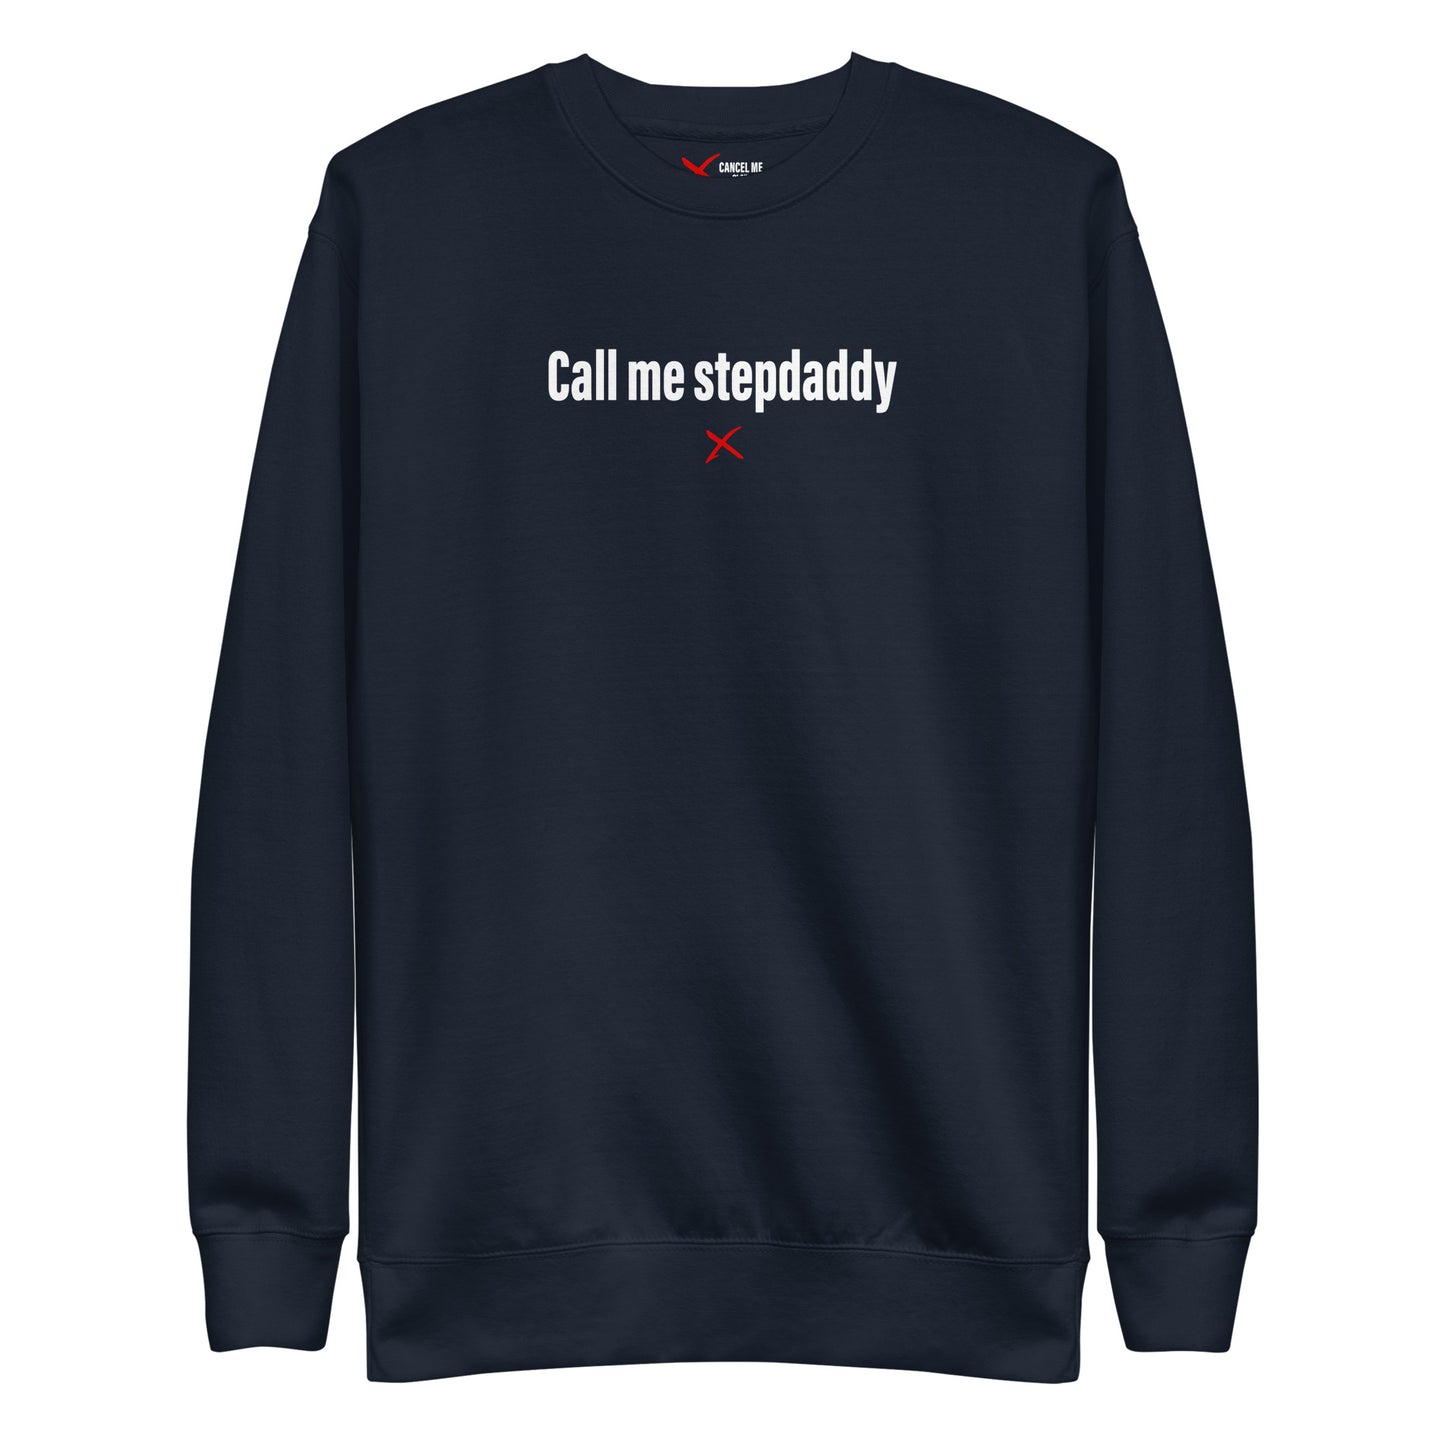 Call me stepdaddy - Sweatshirt